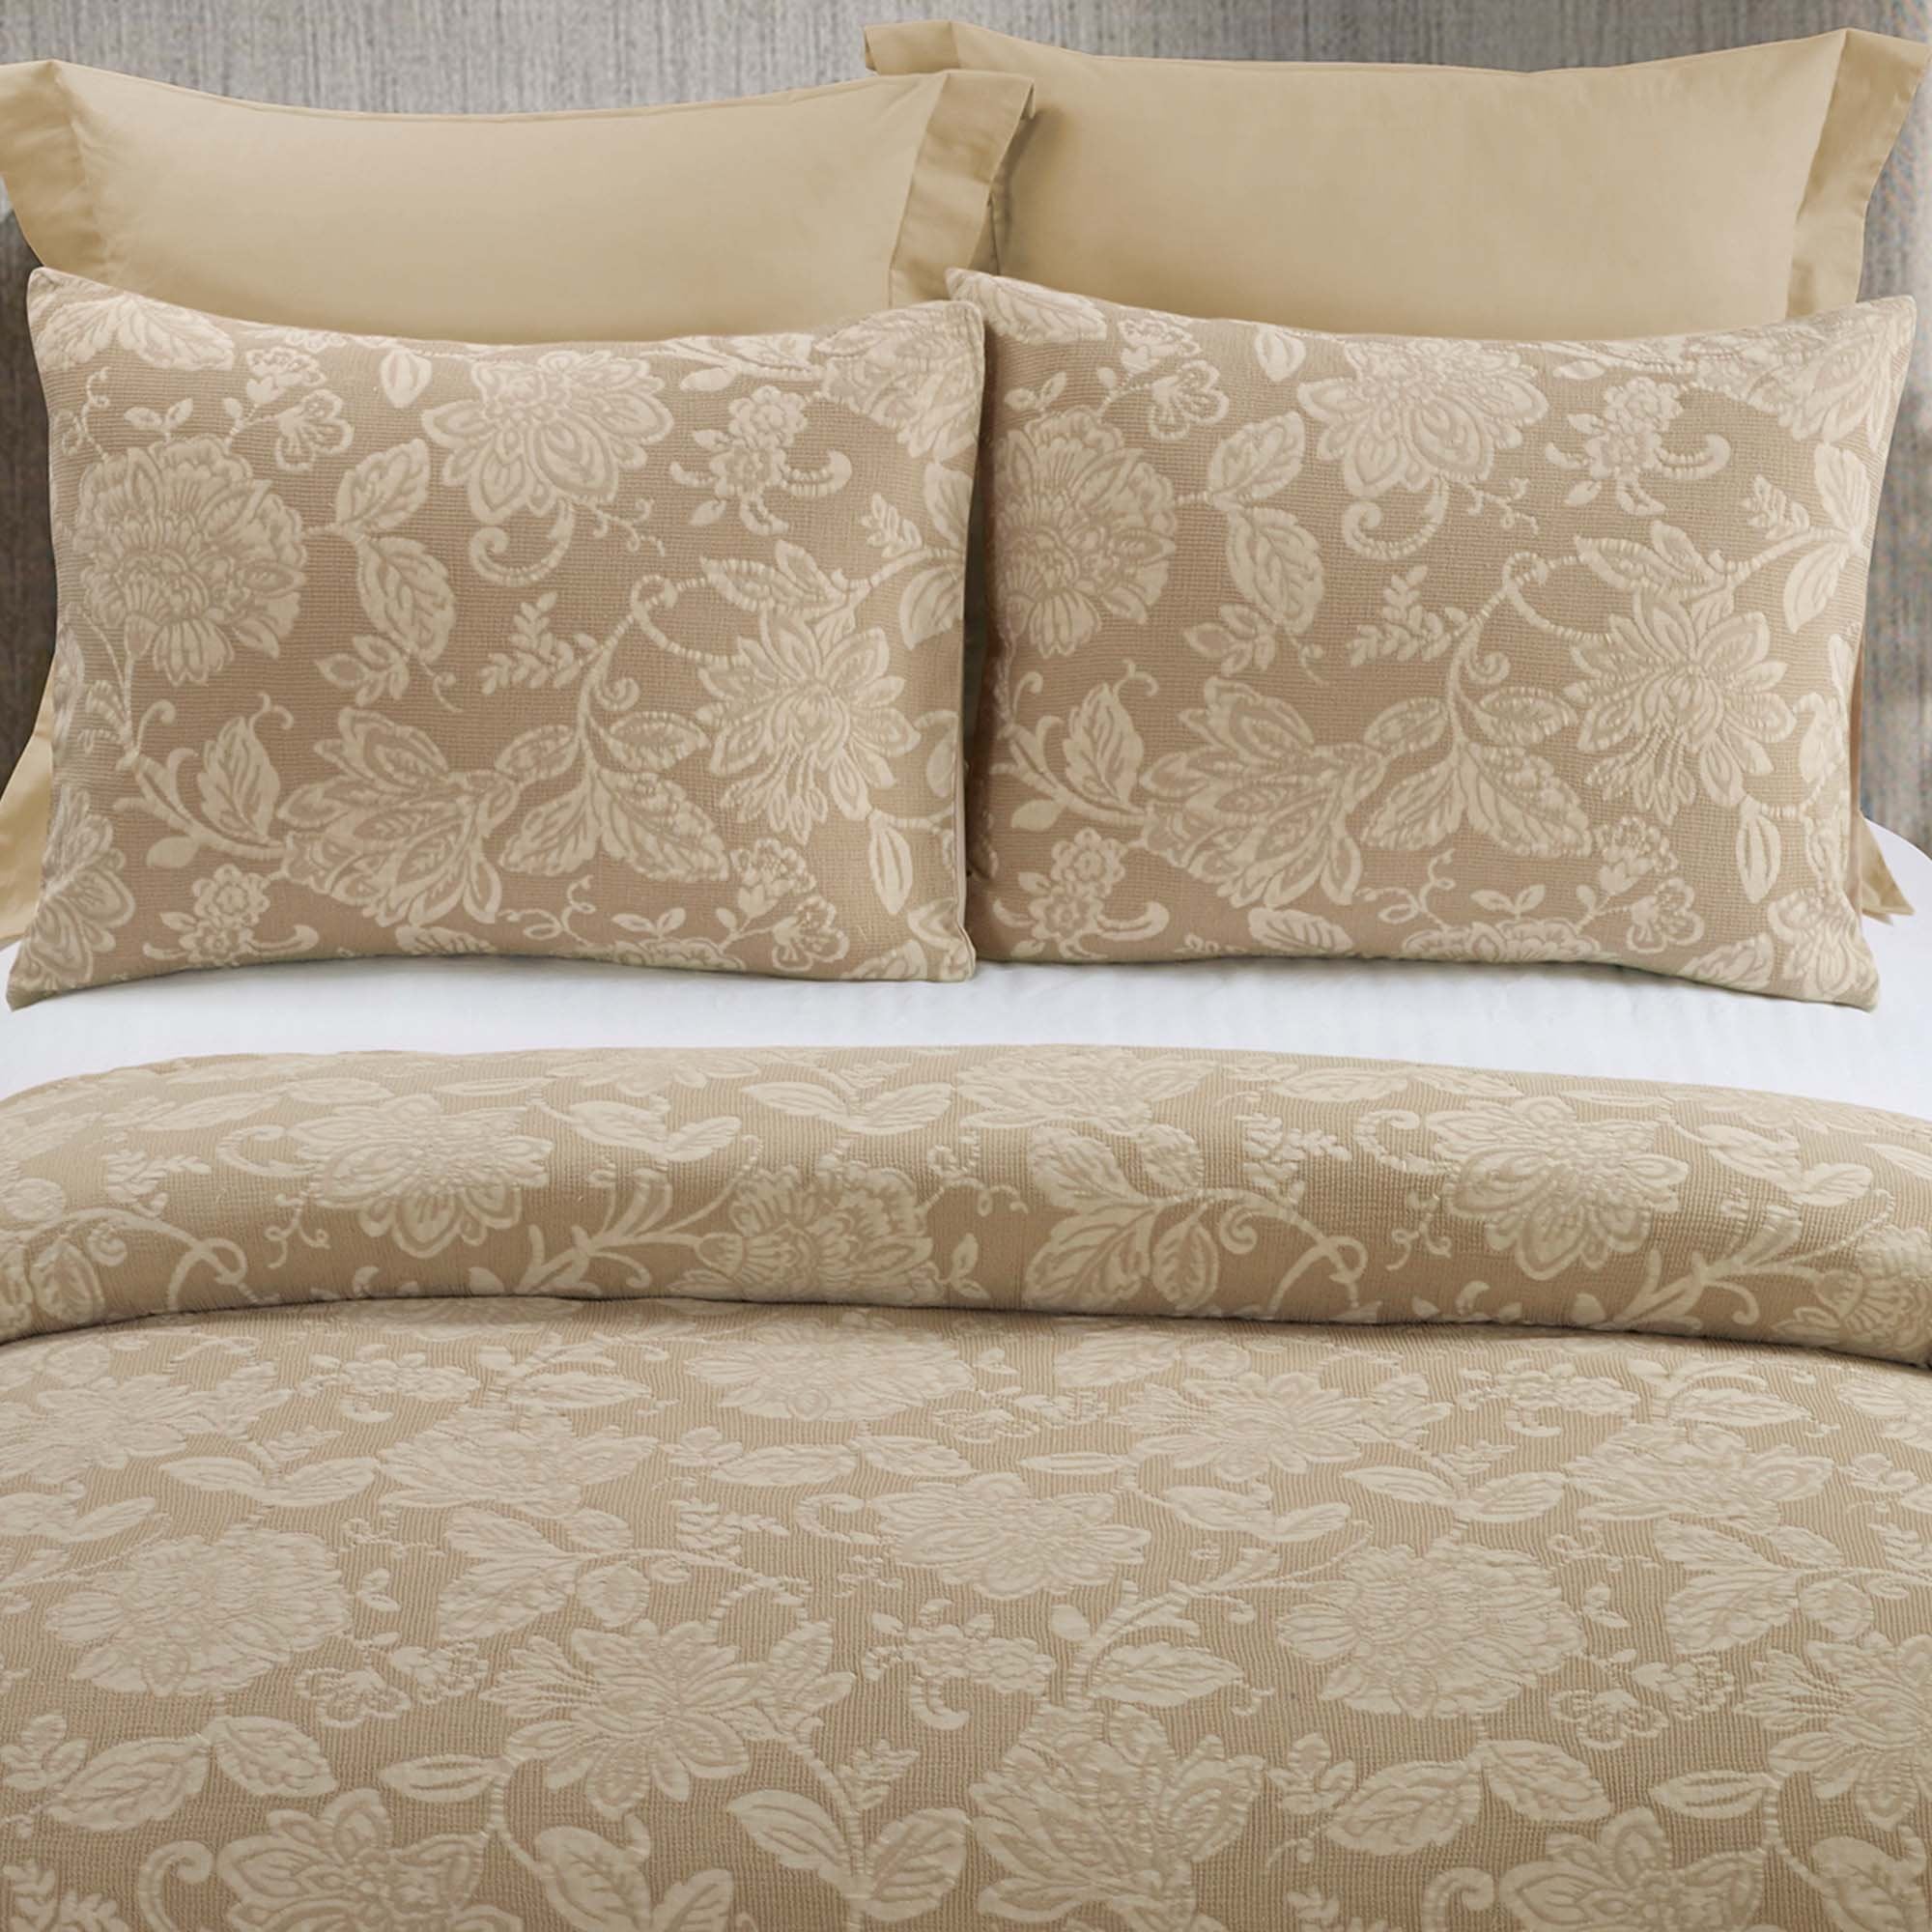 Amadora Cappuccino 3-Piece Comforter Set Comforter Sets By Donna Sharp